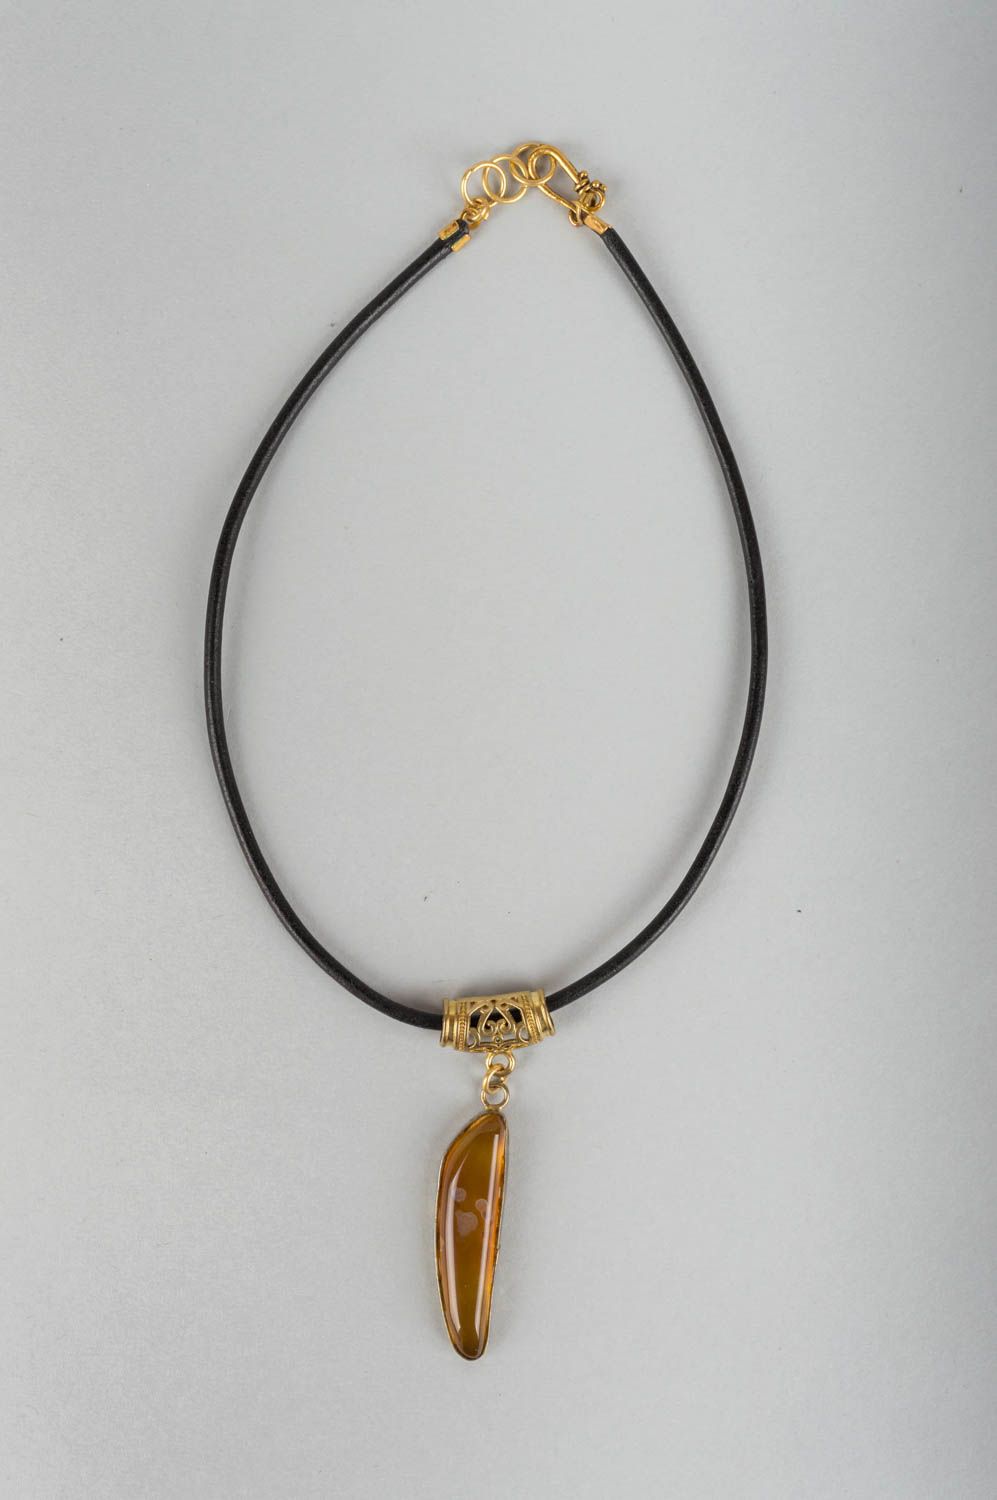 Beautiful stylish handmade neck pendant with natural stone on leather cord photo 2